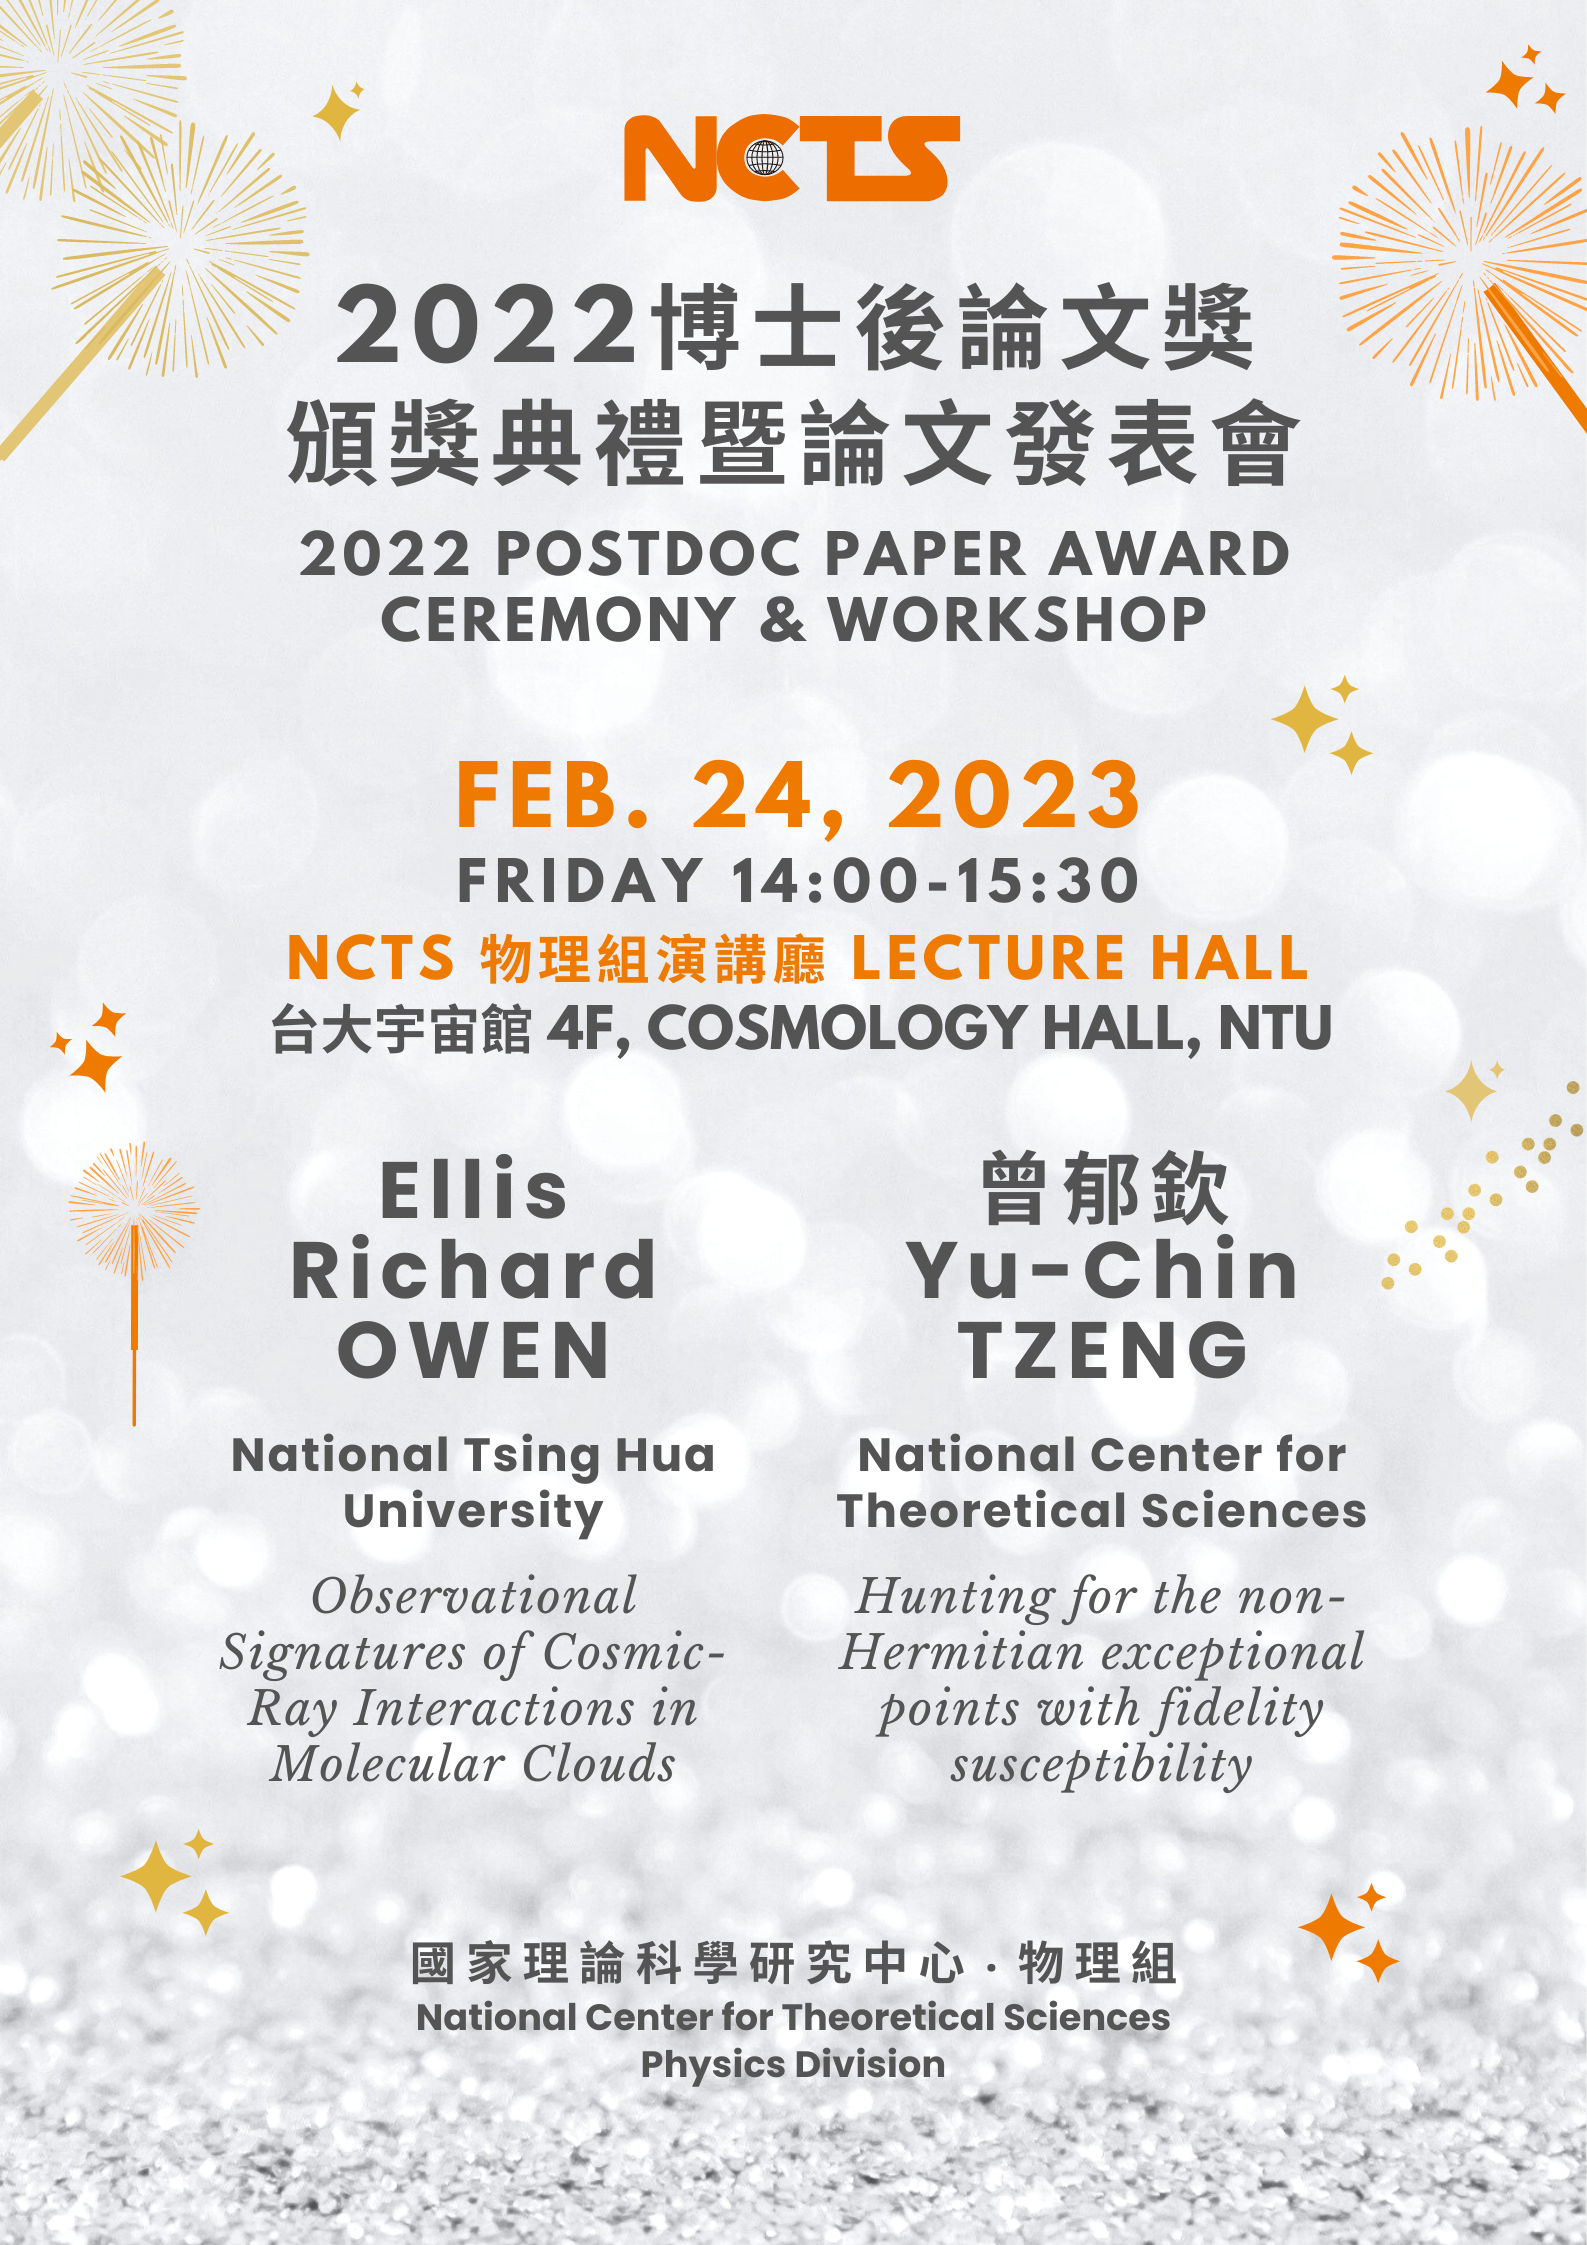 NCTS Physics 2022 Postdoc Paper Award Ceremony & Workshop